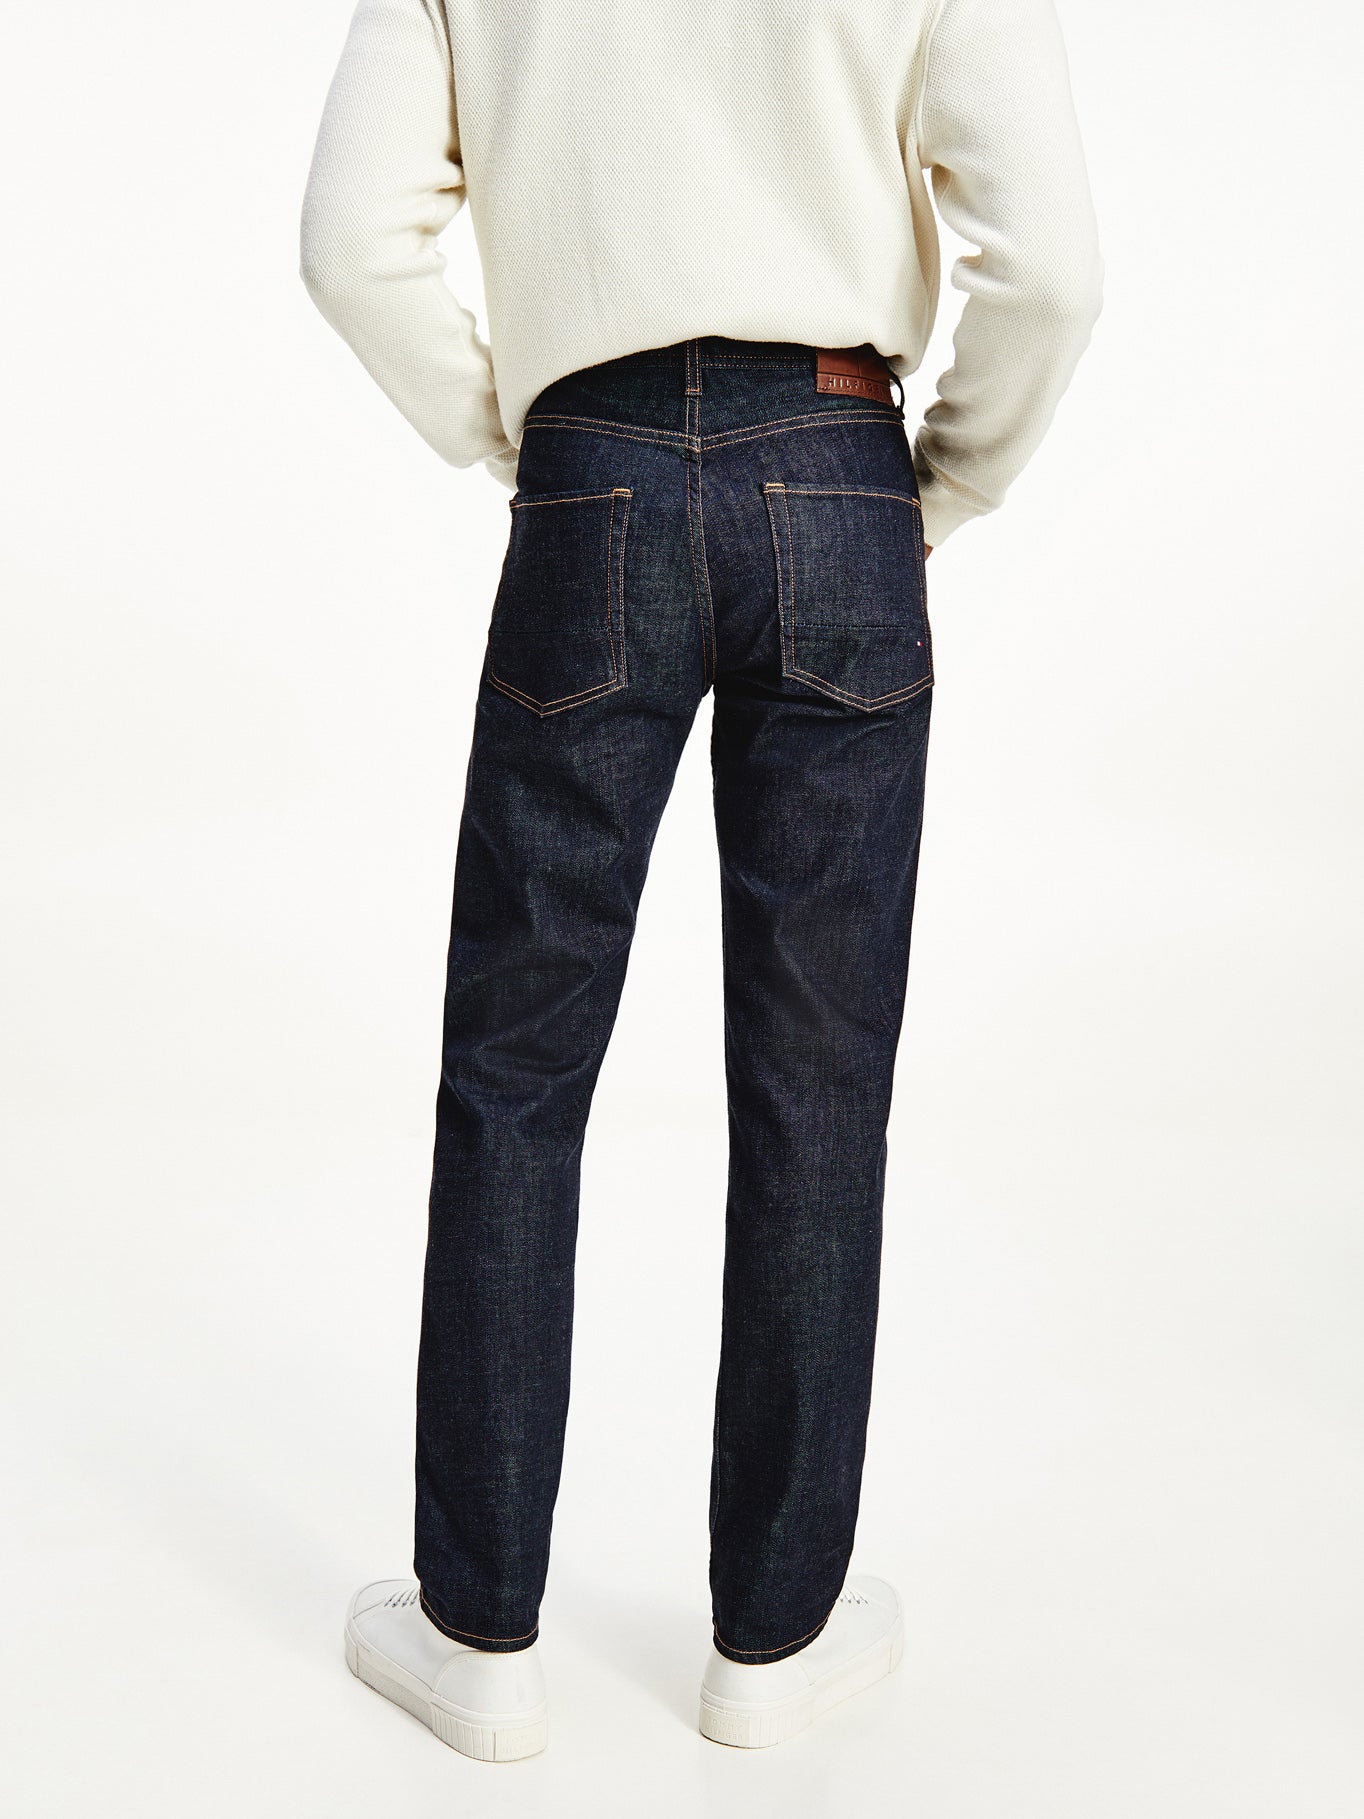 pantalon-jeans-tommy-hilfiger-p-caballeros